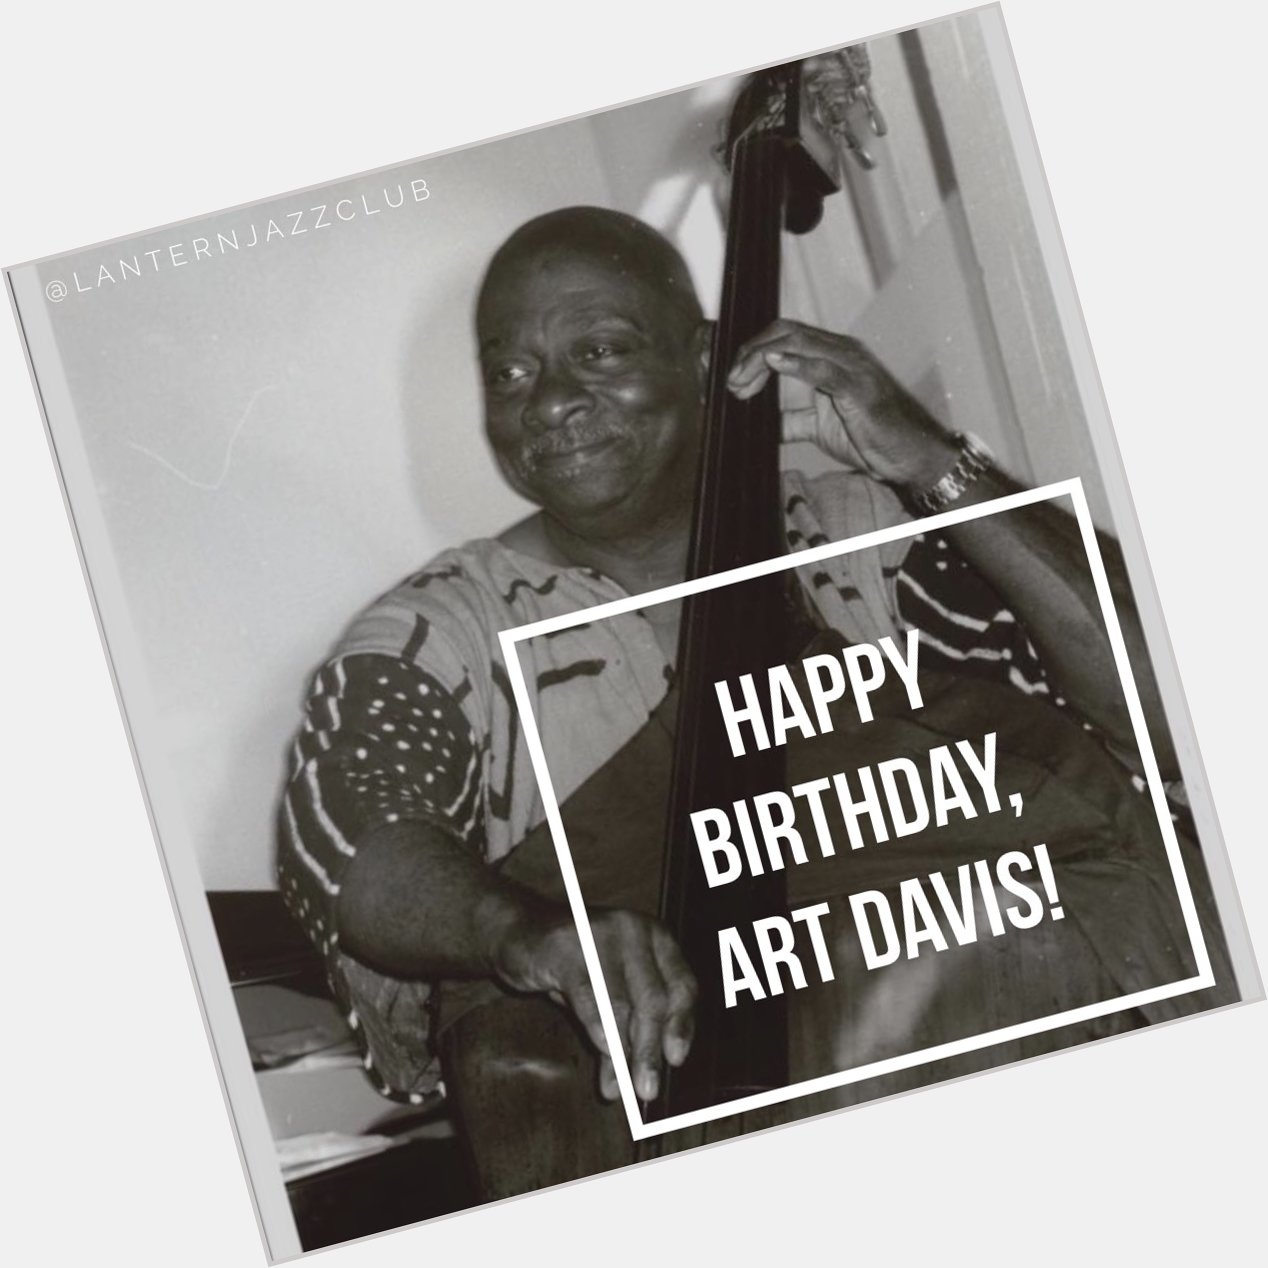 Happy birthday, Art Davis!   